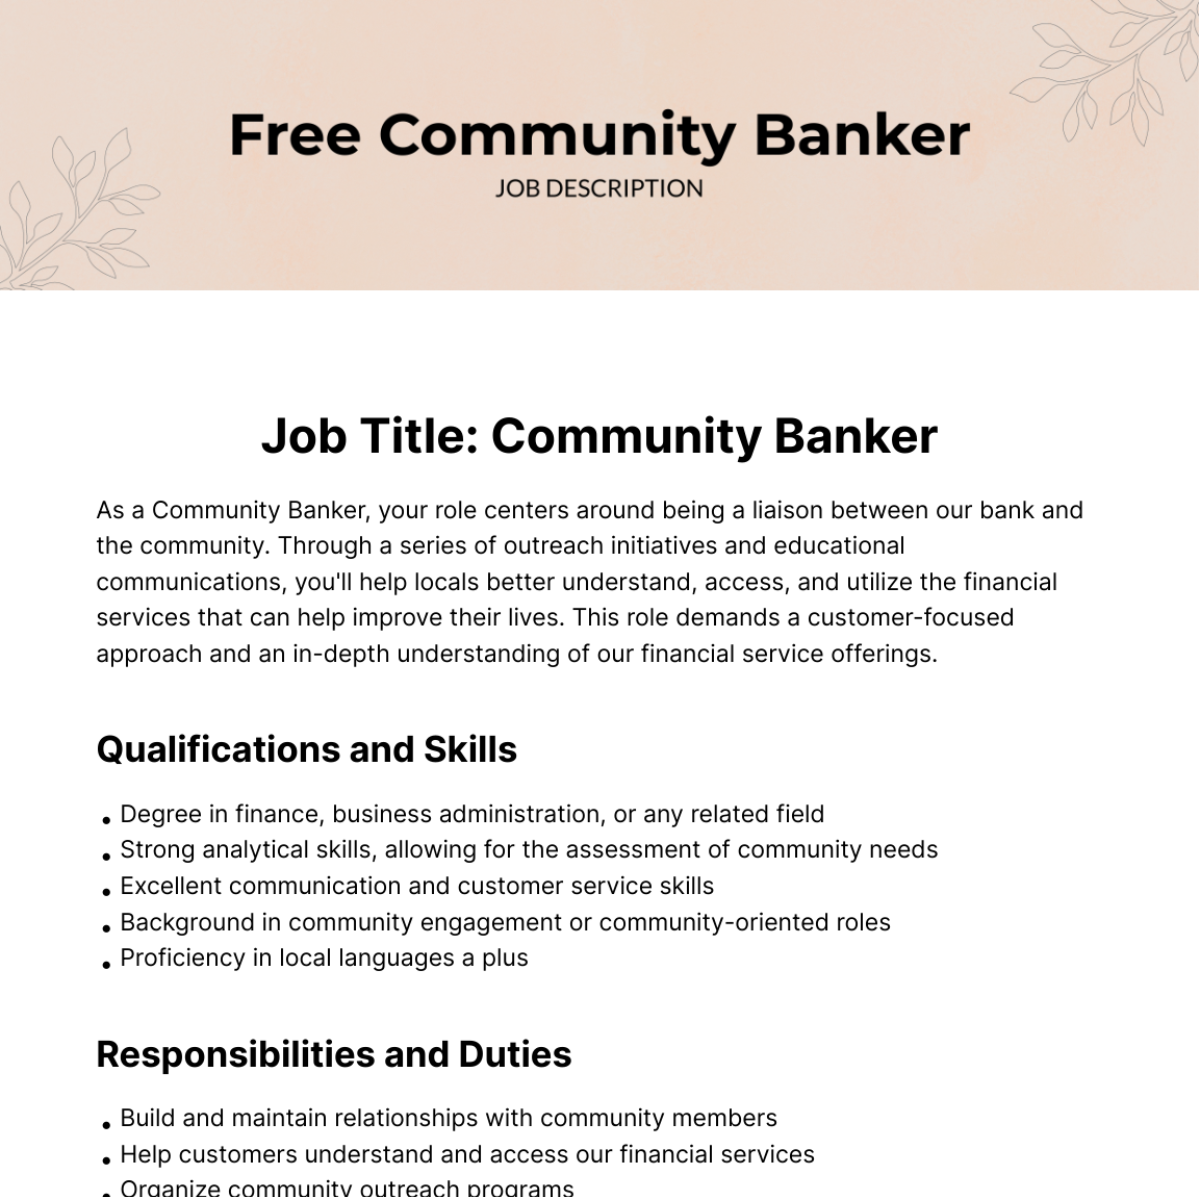 Free Community Banker Job Description Template